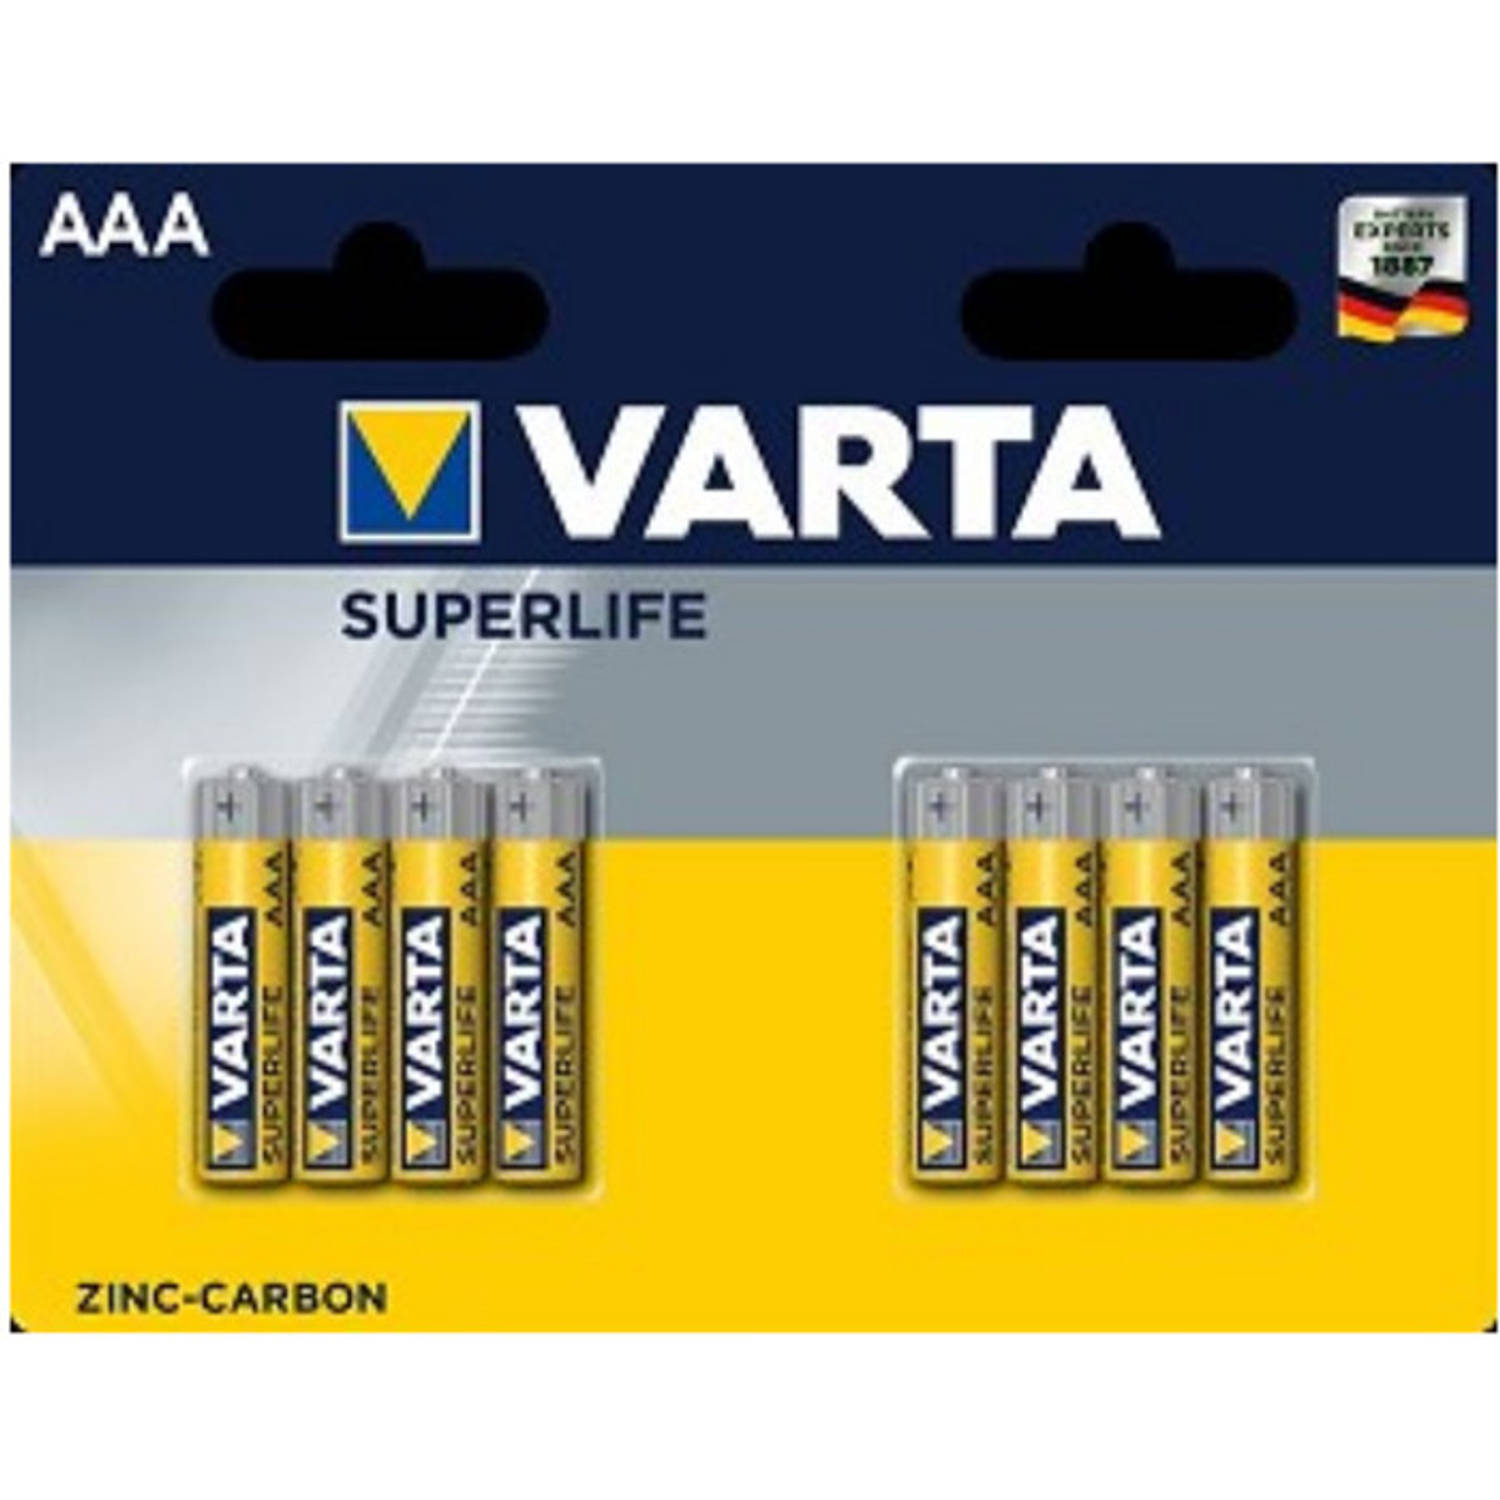 Varta batterijen AAA Superlife R03 1,5V zink-carbon 8 stuks